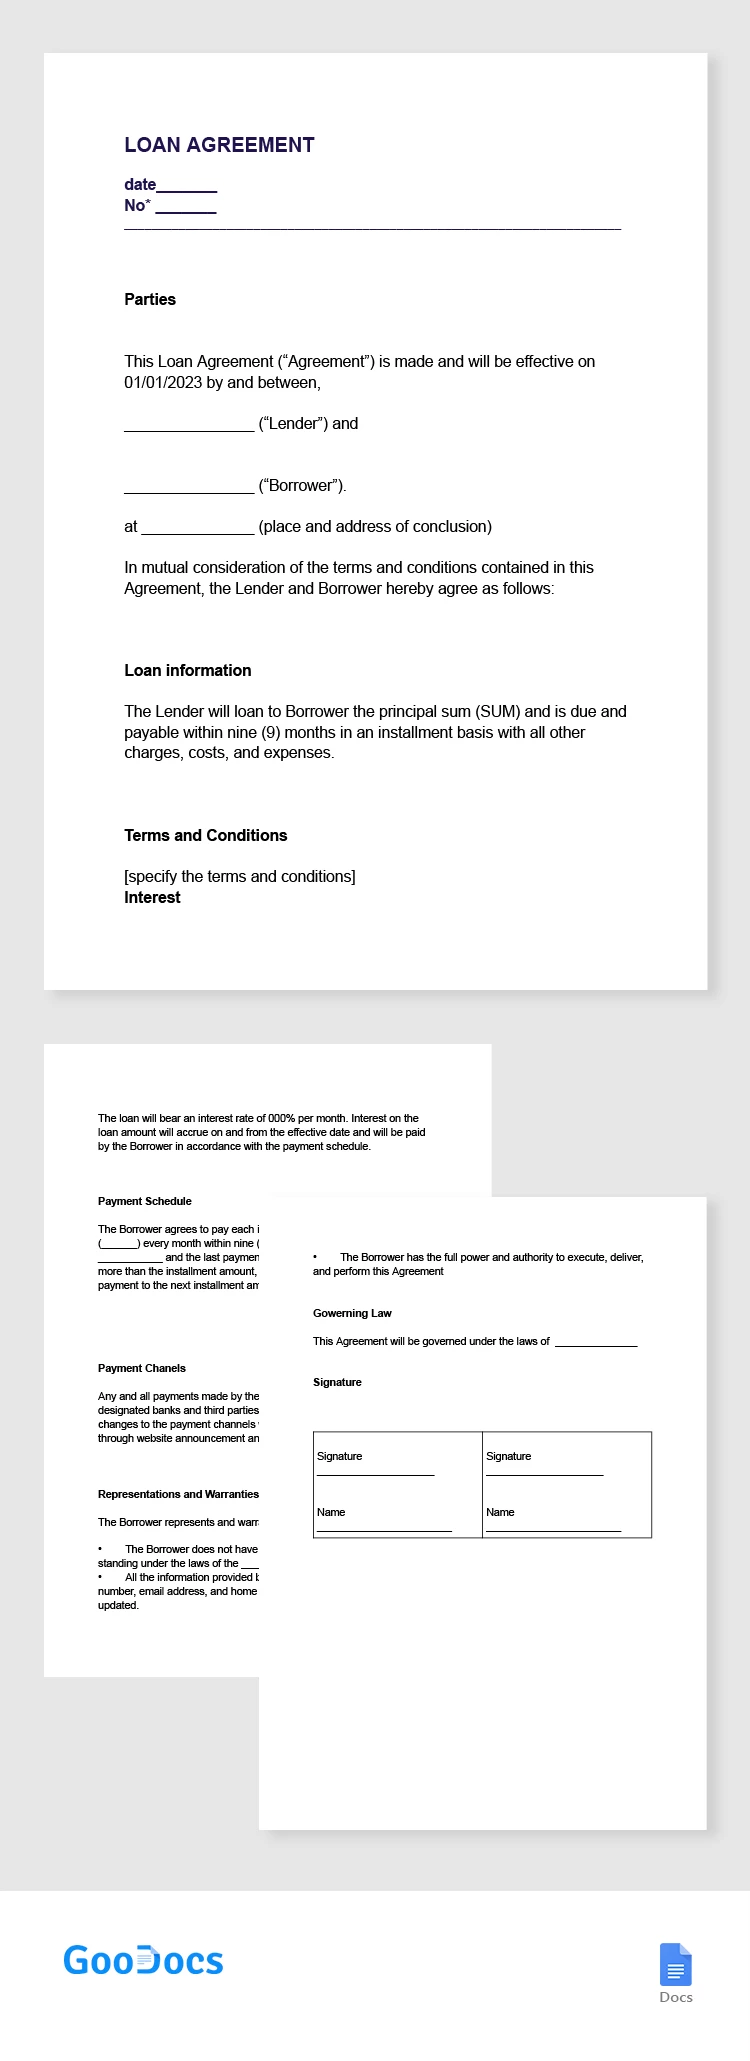 Loan Agreement - free Google Docs Template - 10065344